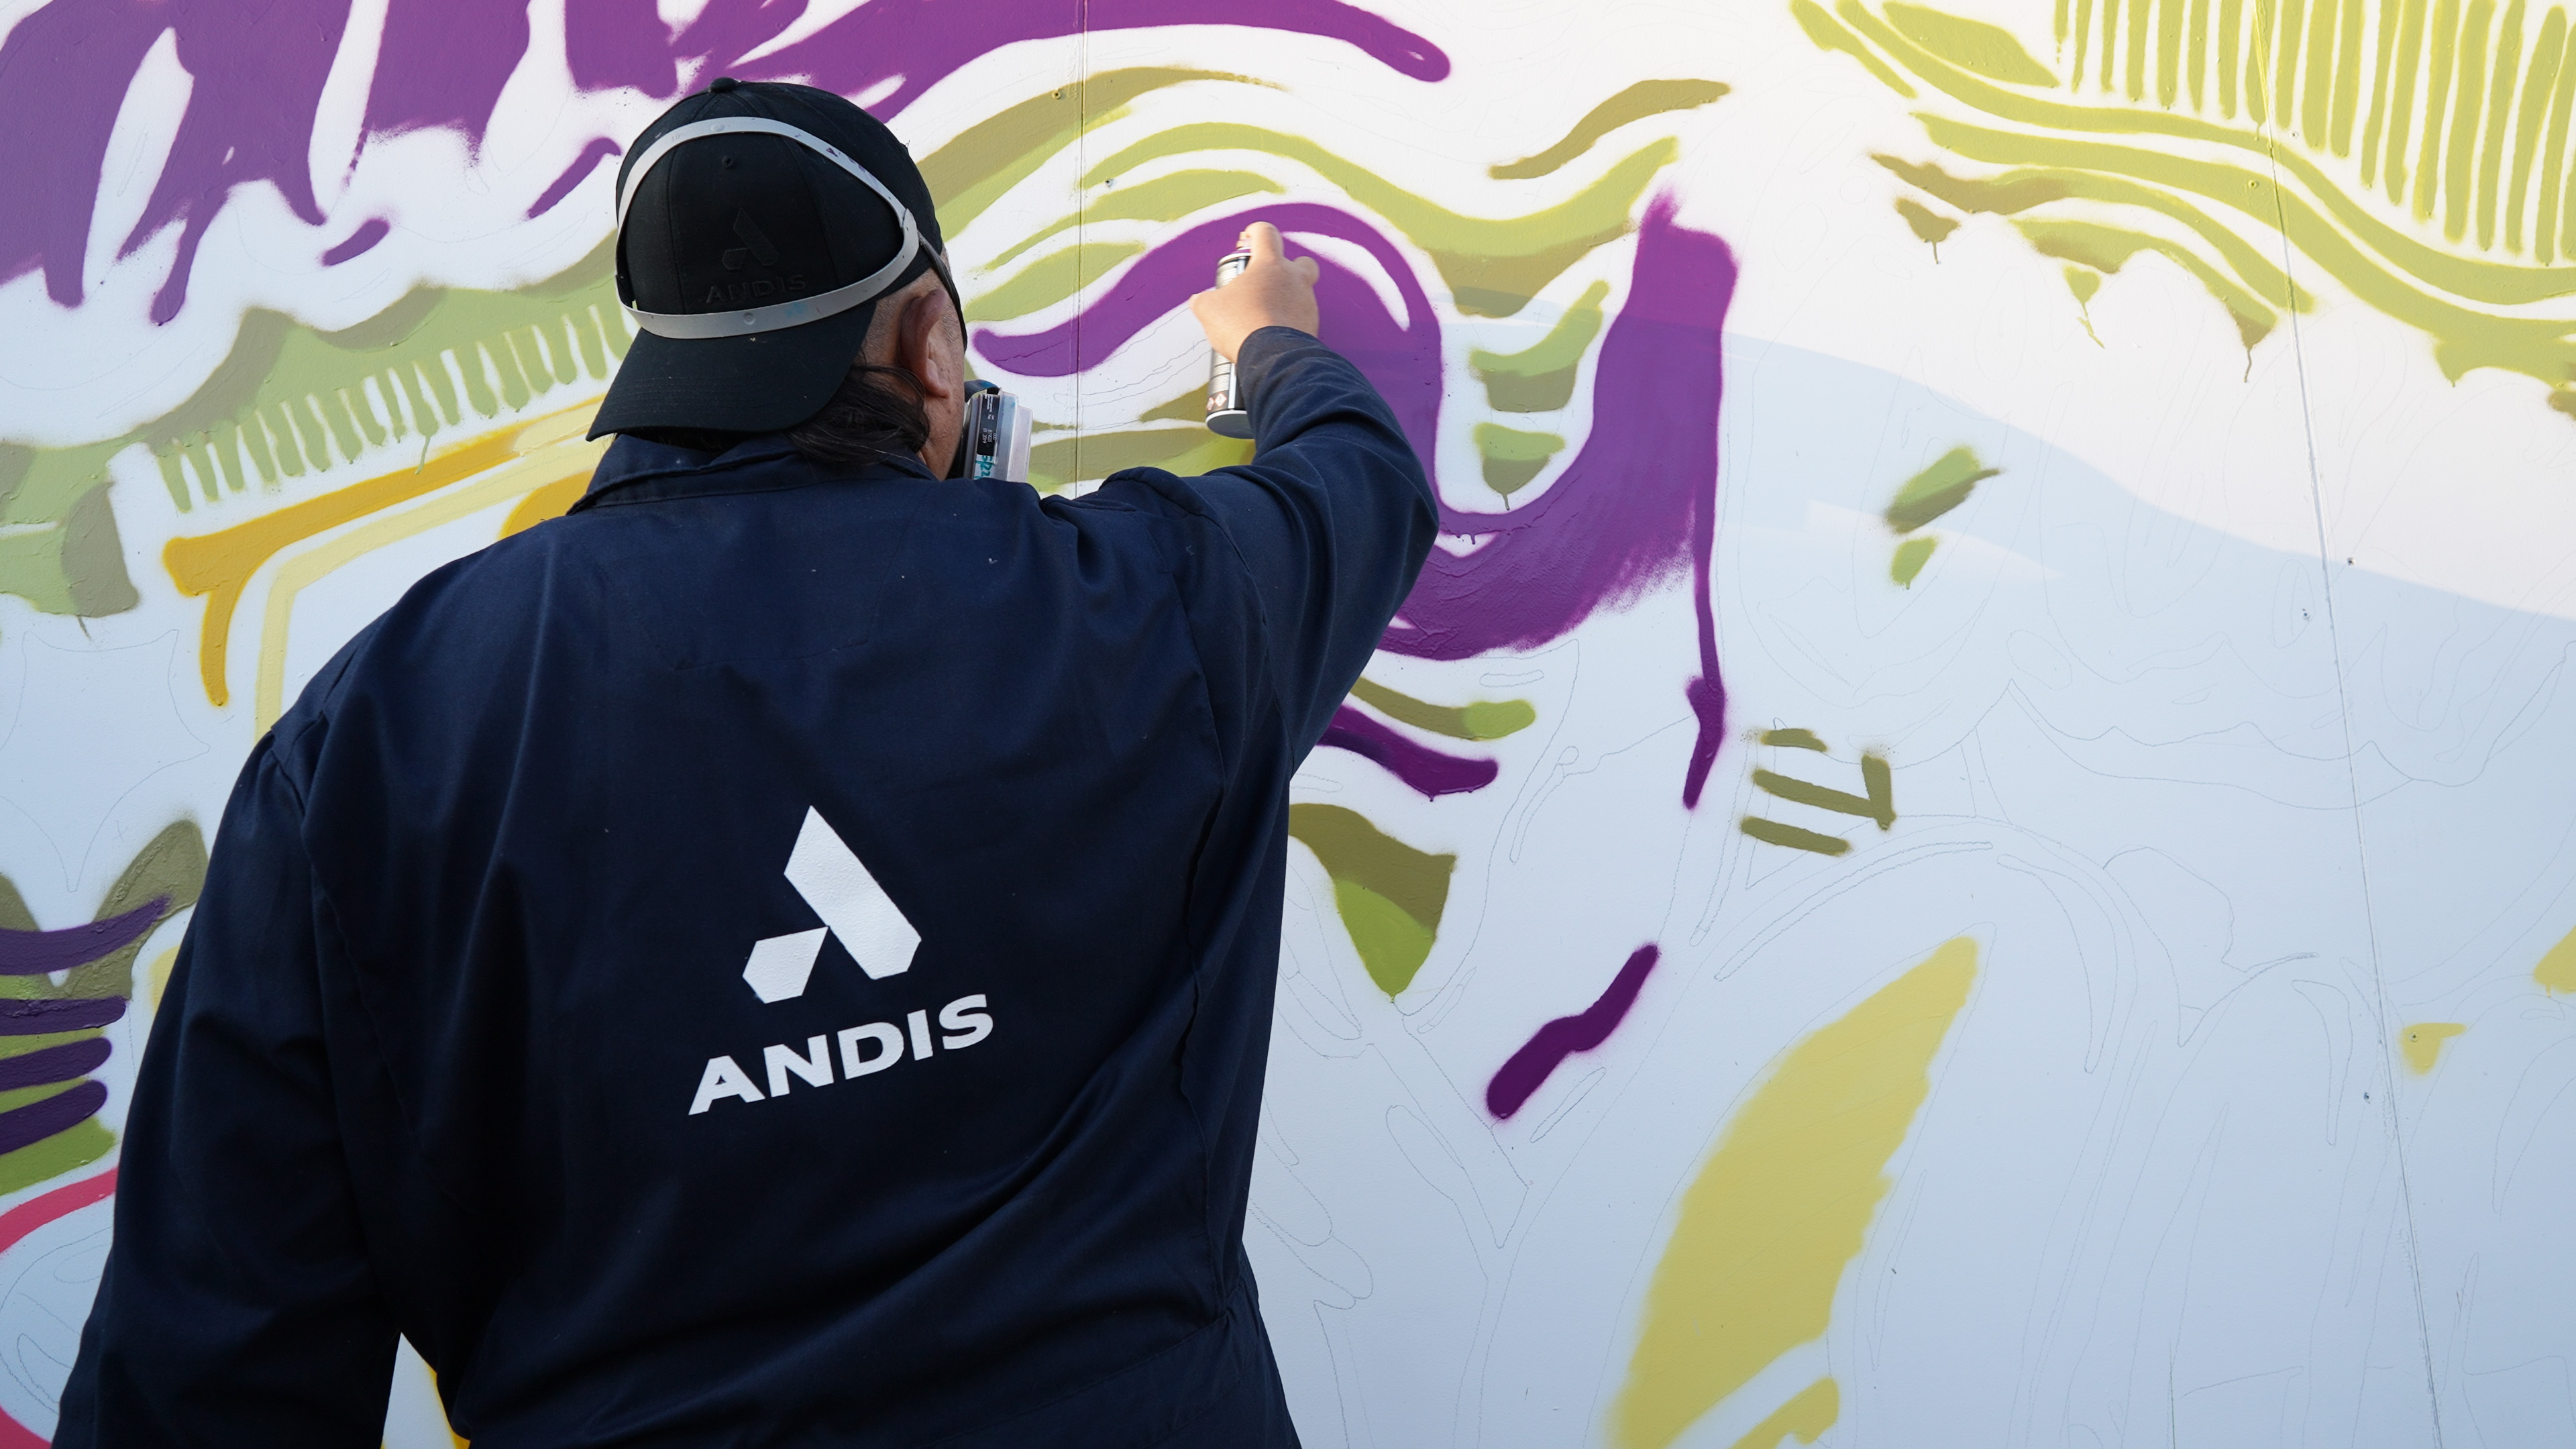 Brighter Community Venice Beach man spray painting on mural in purple